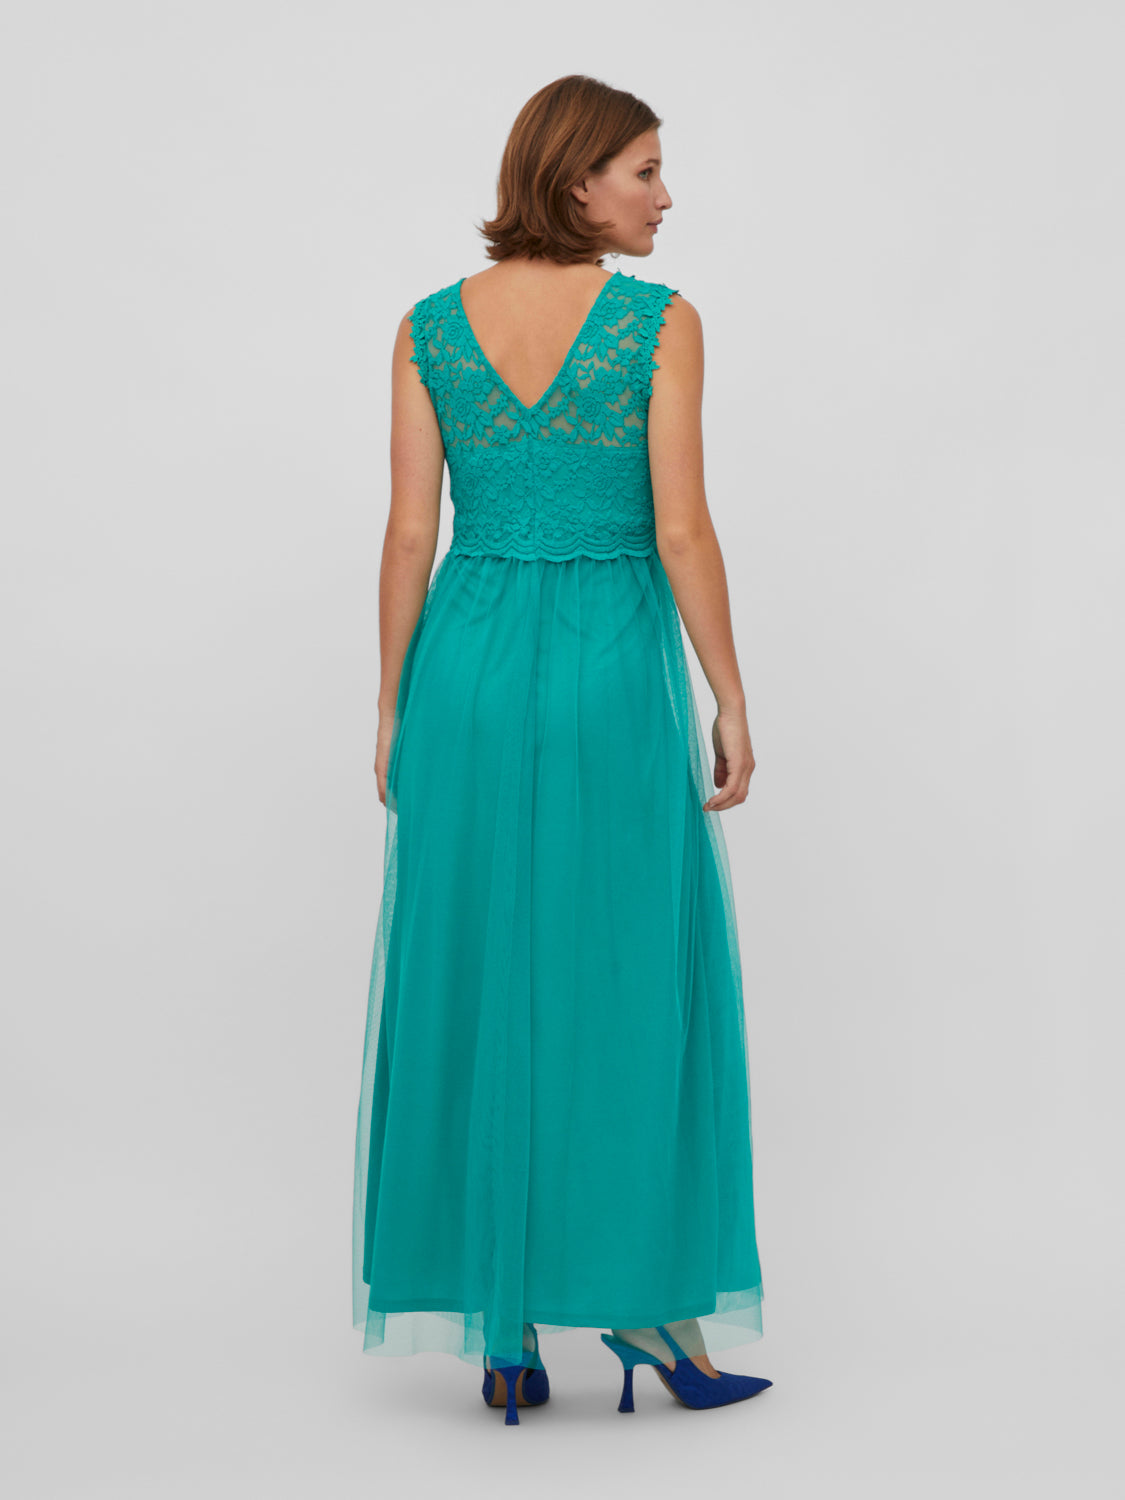 VILYNNEA Dress - Alhambra